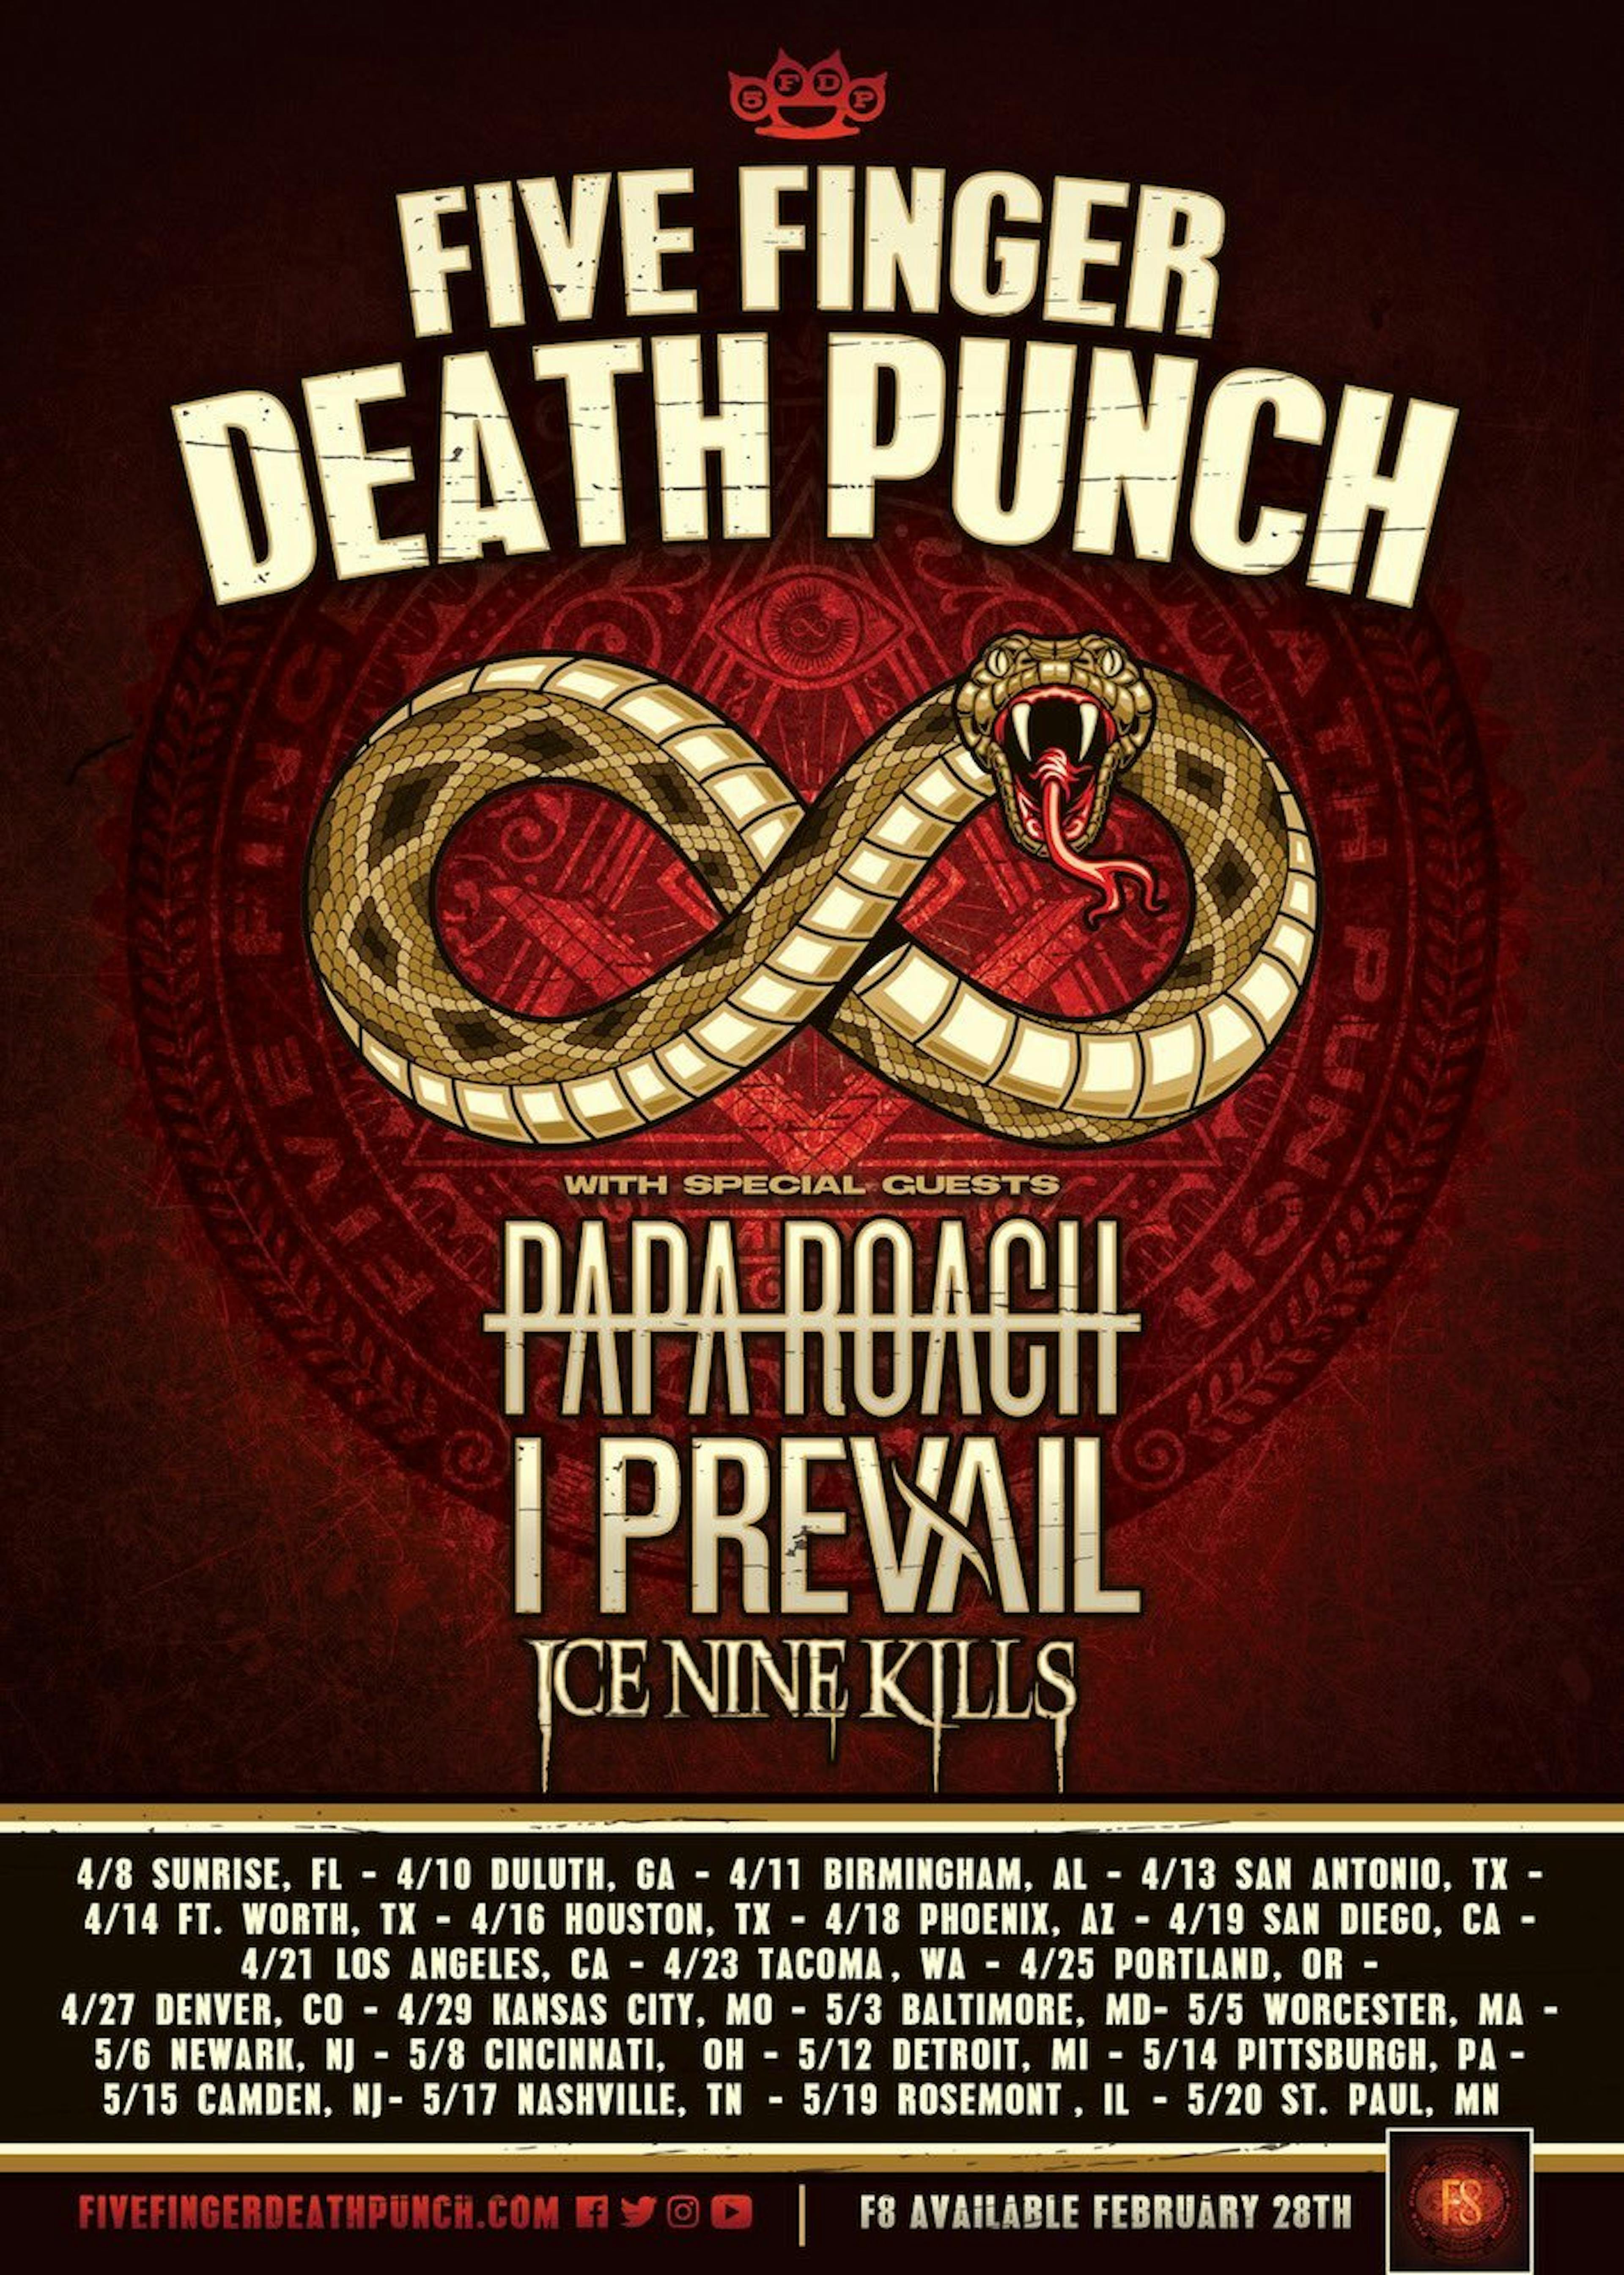 I Prevail opens for Five Finger Death Punch July 23 at Soaring Eagle